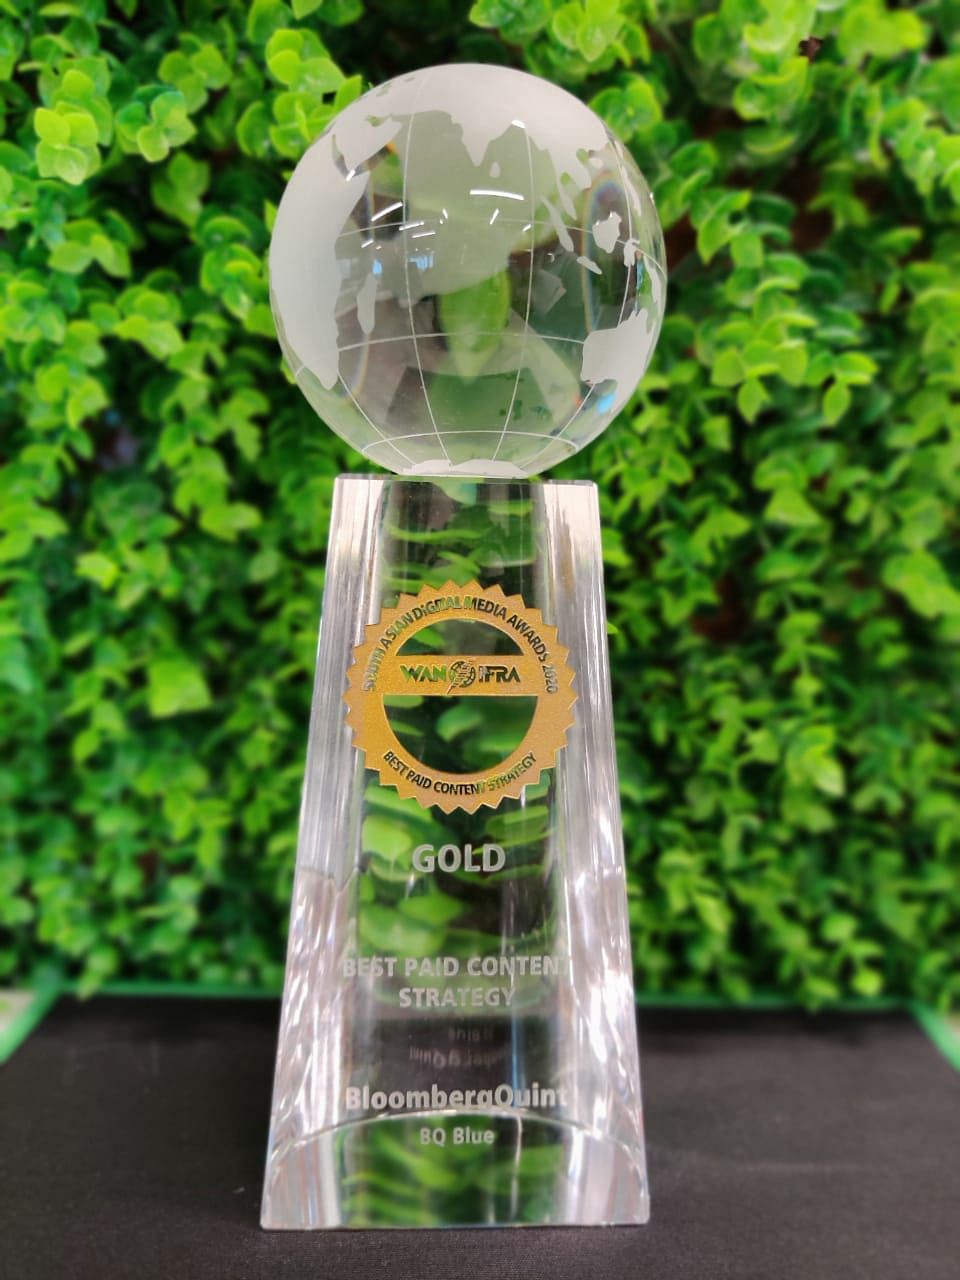 BloombergQuint wins Gold at South Asian Digital Media Awards 2020